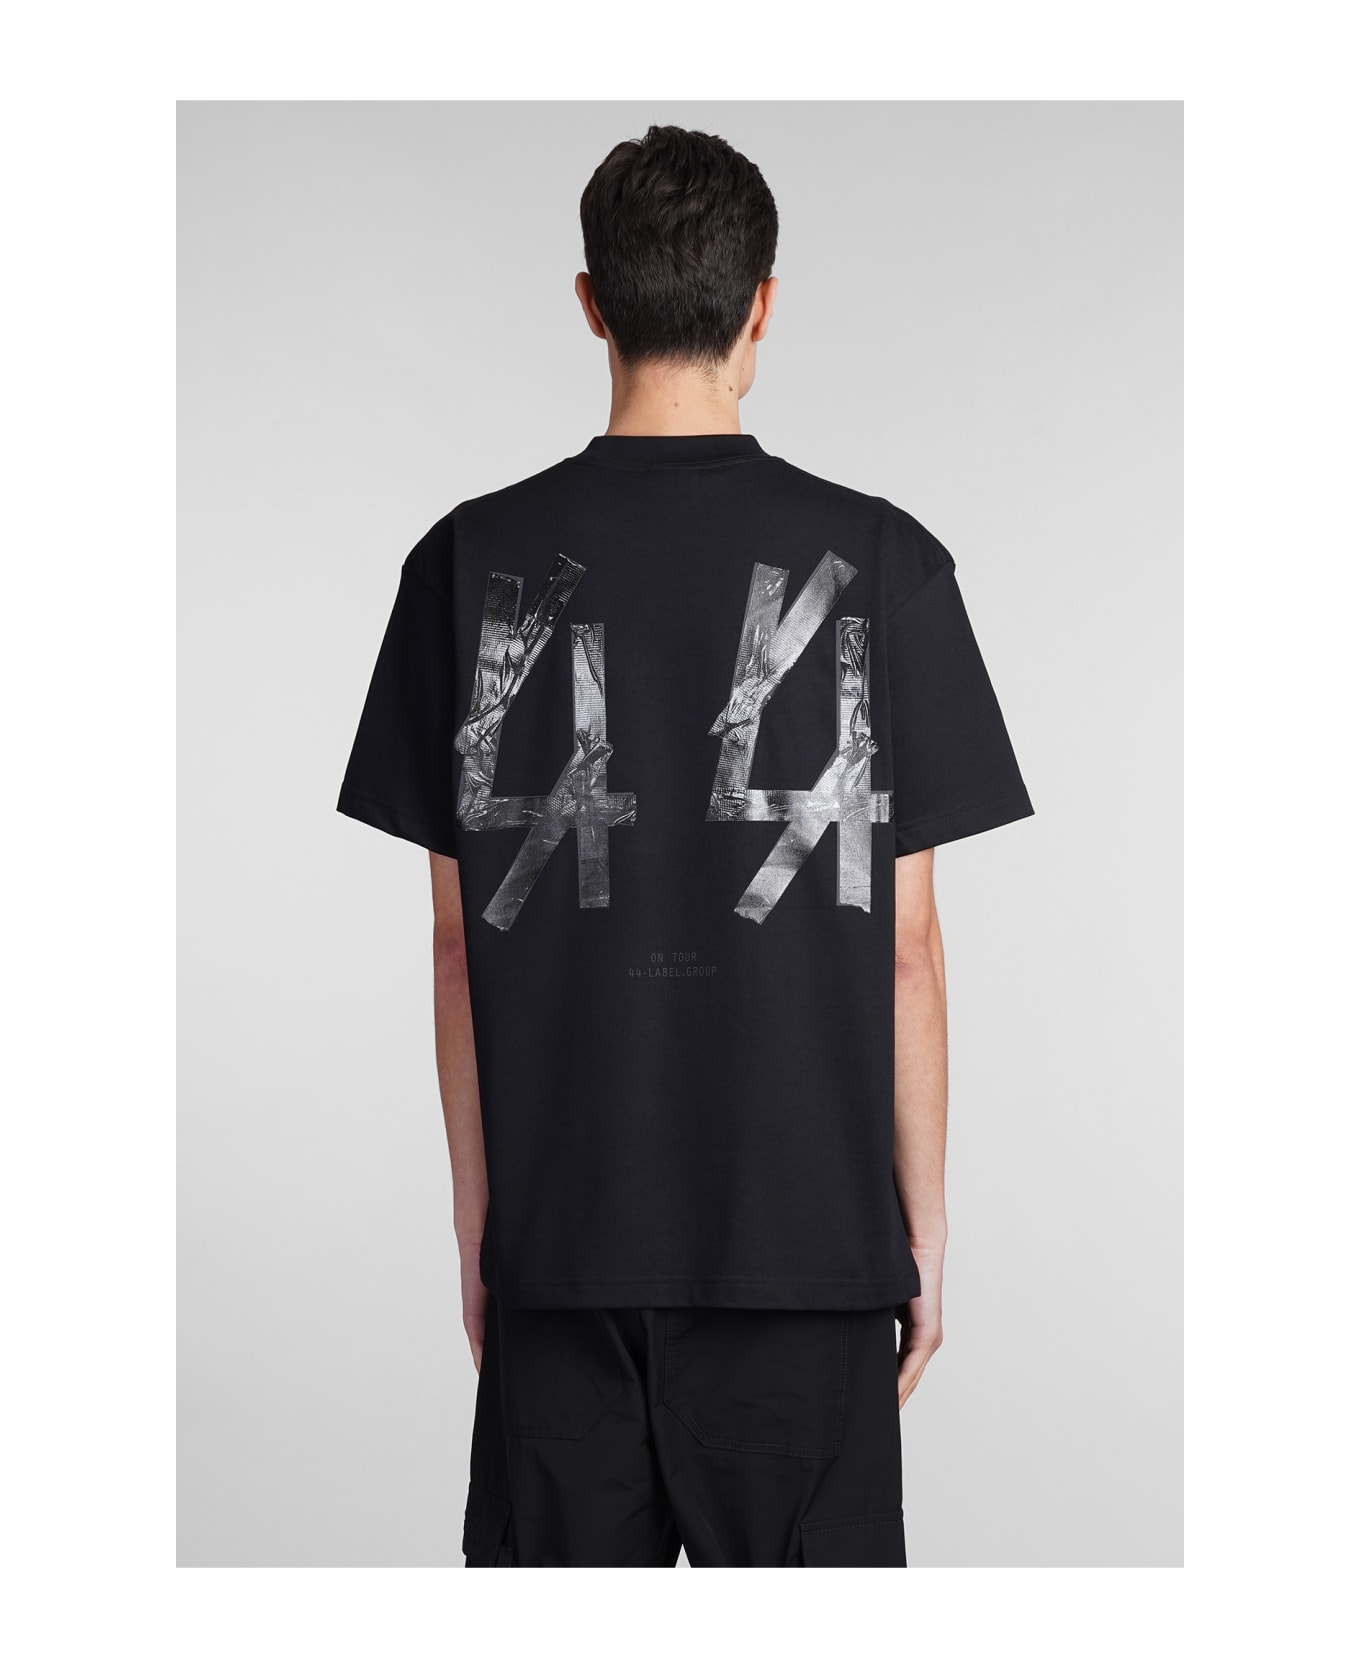 44 Label Group T-shirt In Black Cotton - black シャツ